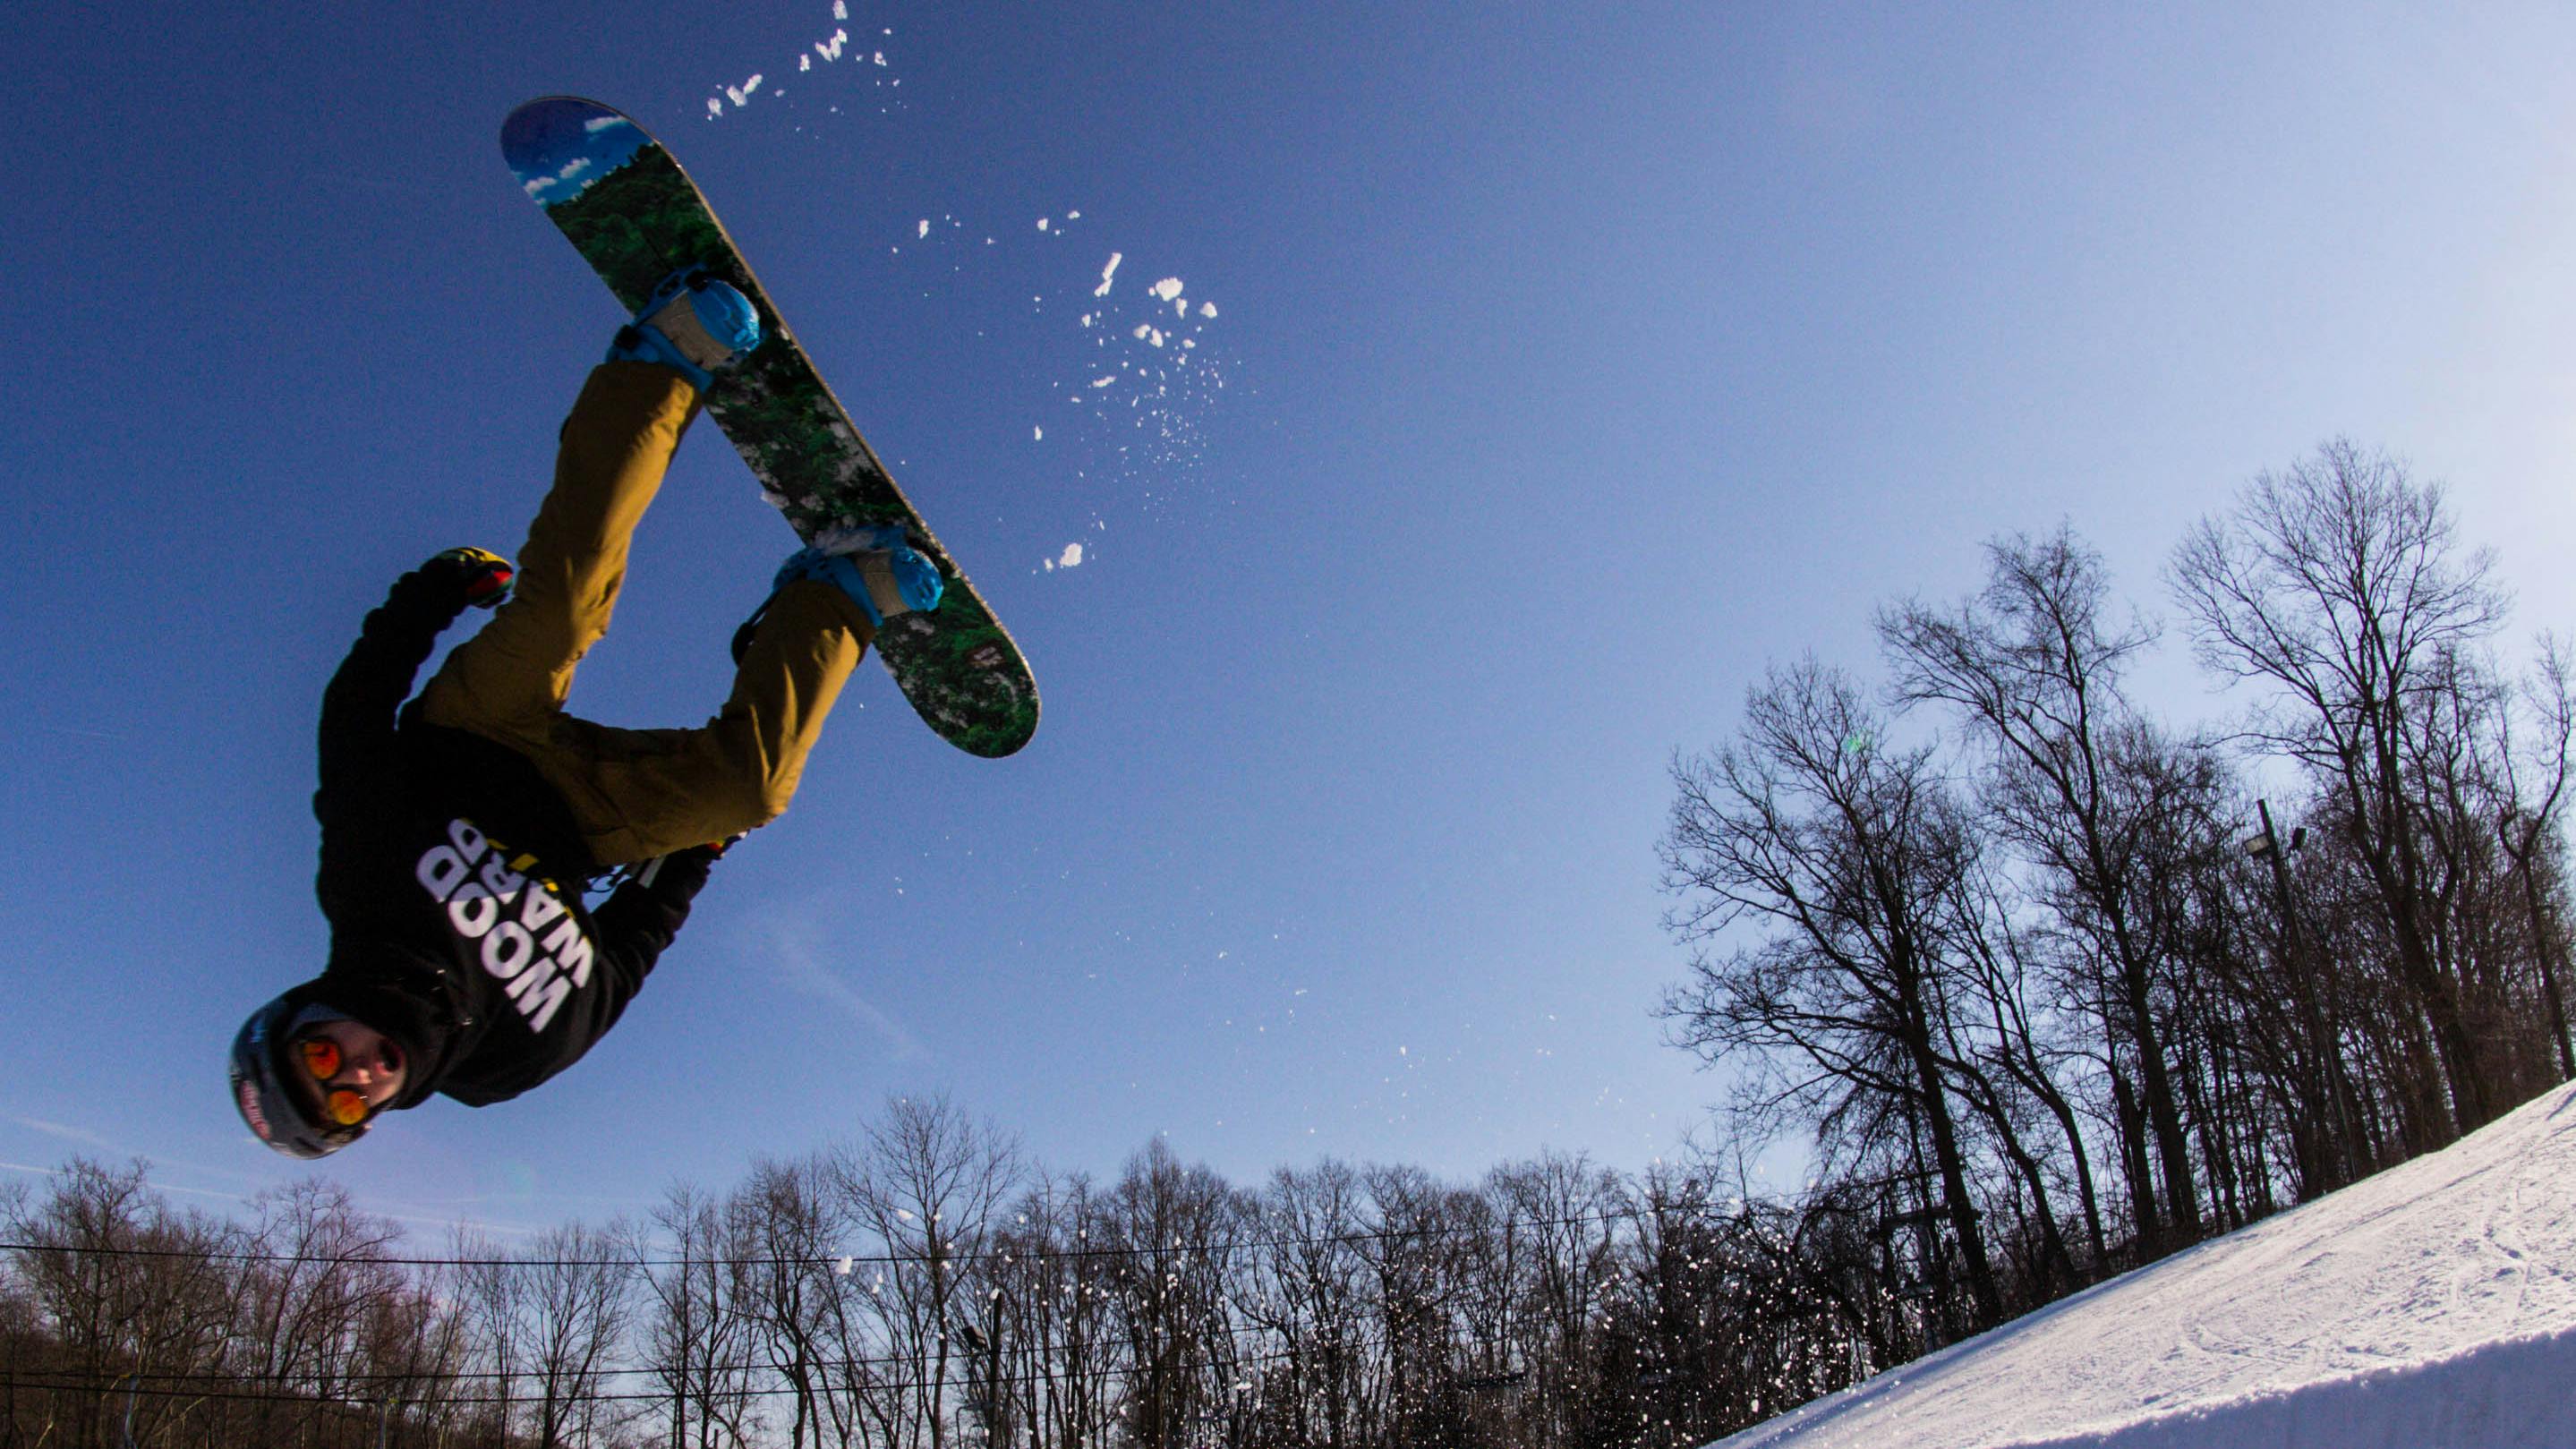 A snowboarder in a black sweatshirt executes a flip